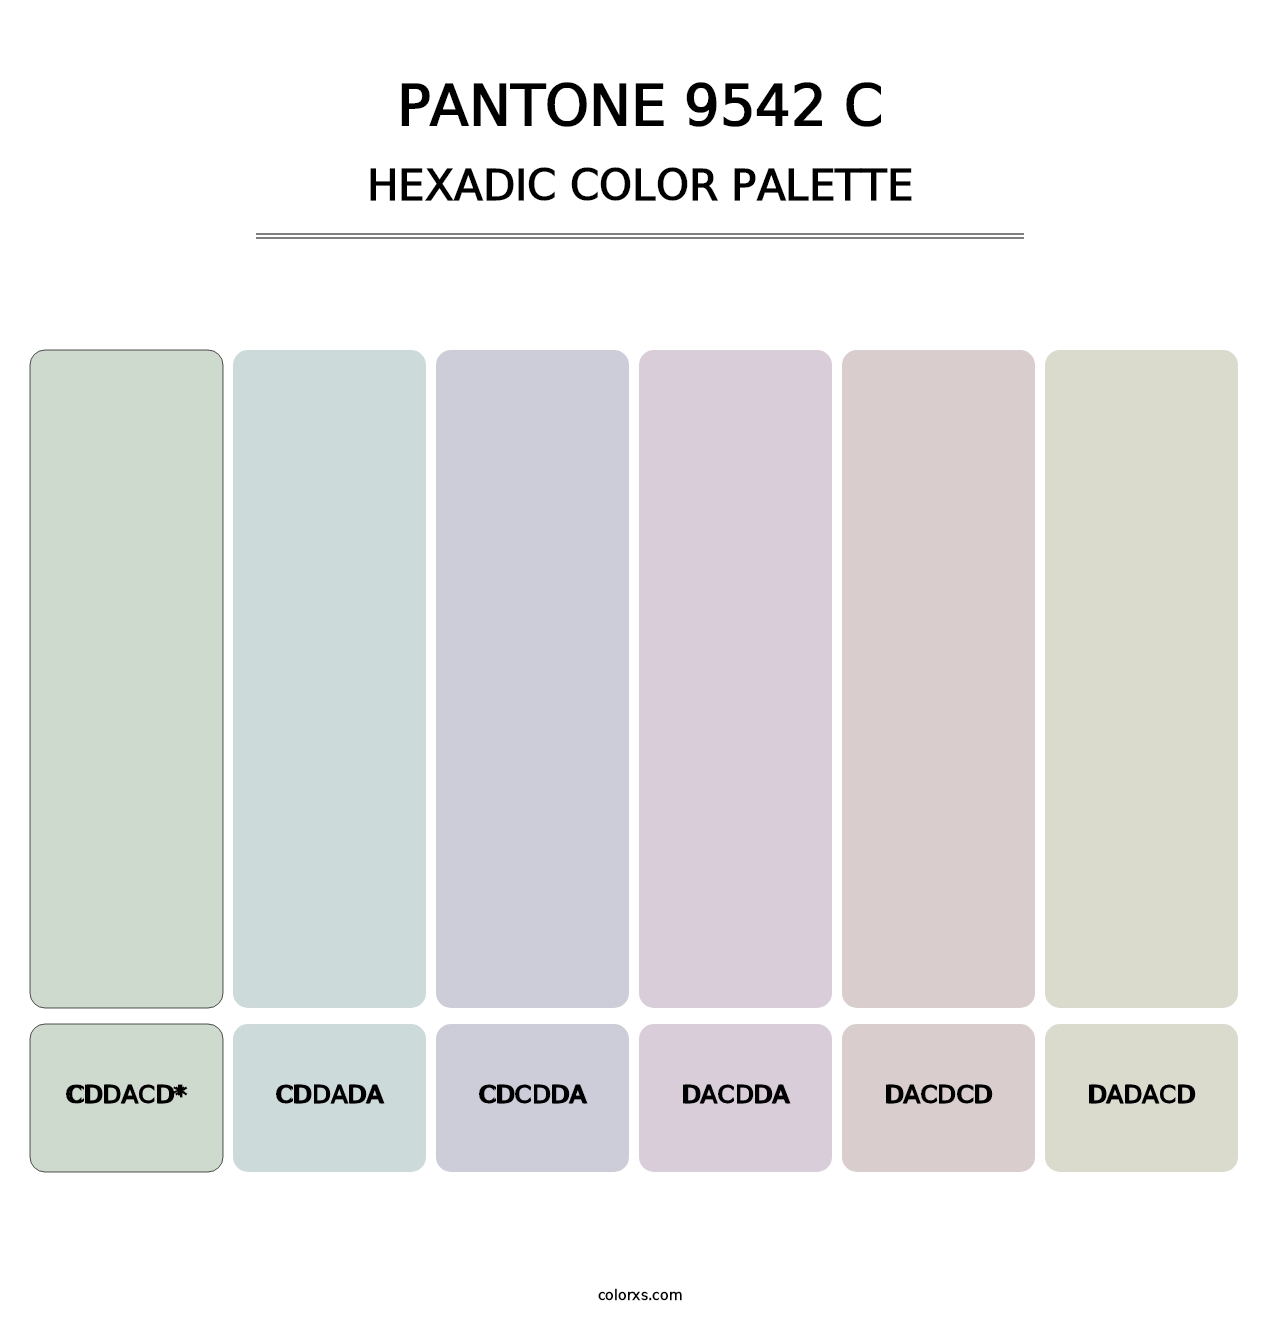 PANTONE 9542 C - Hexadic Color Palette